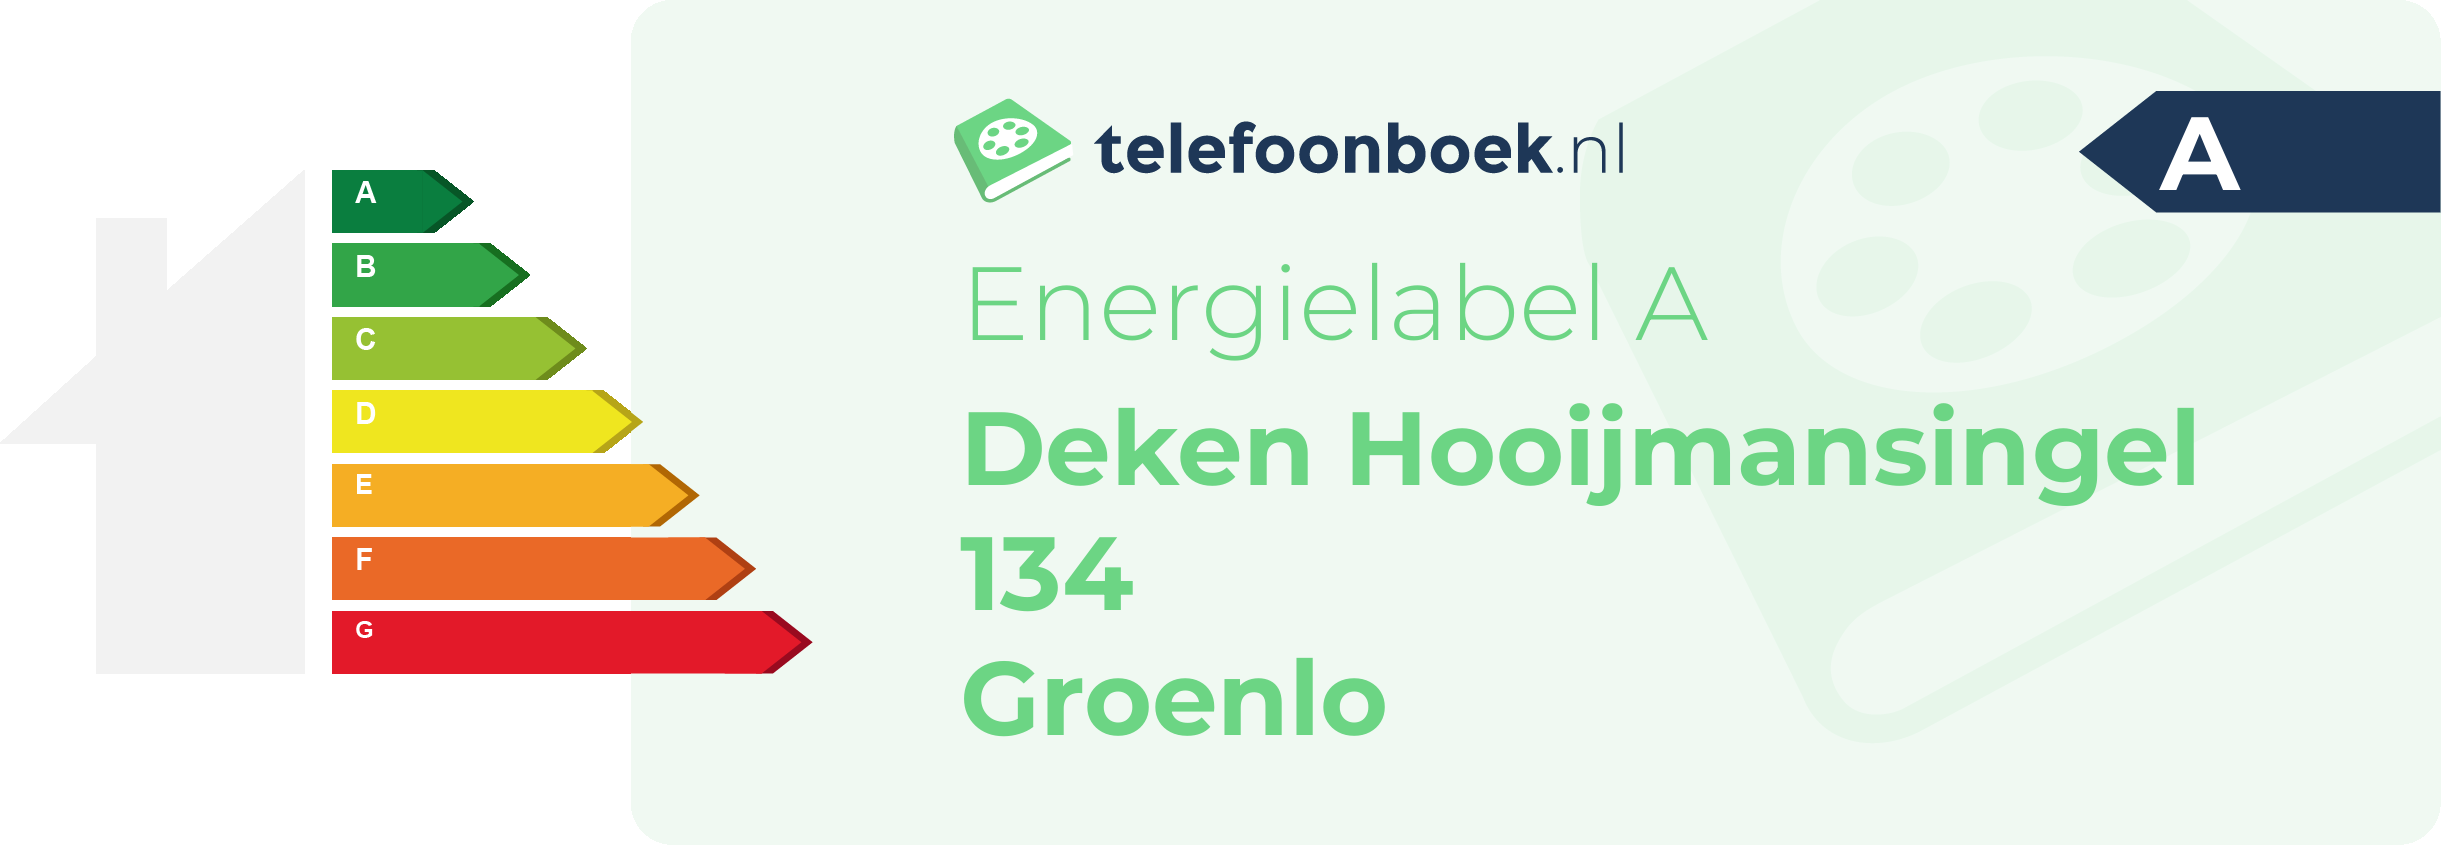 Energielabel Deken Hooijmansingel 134 Groenlo